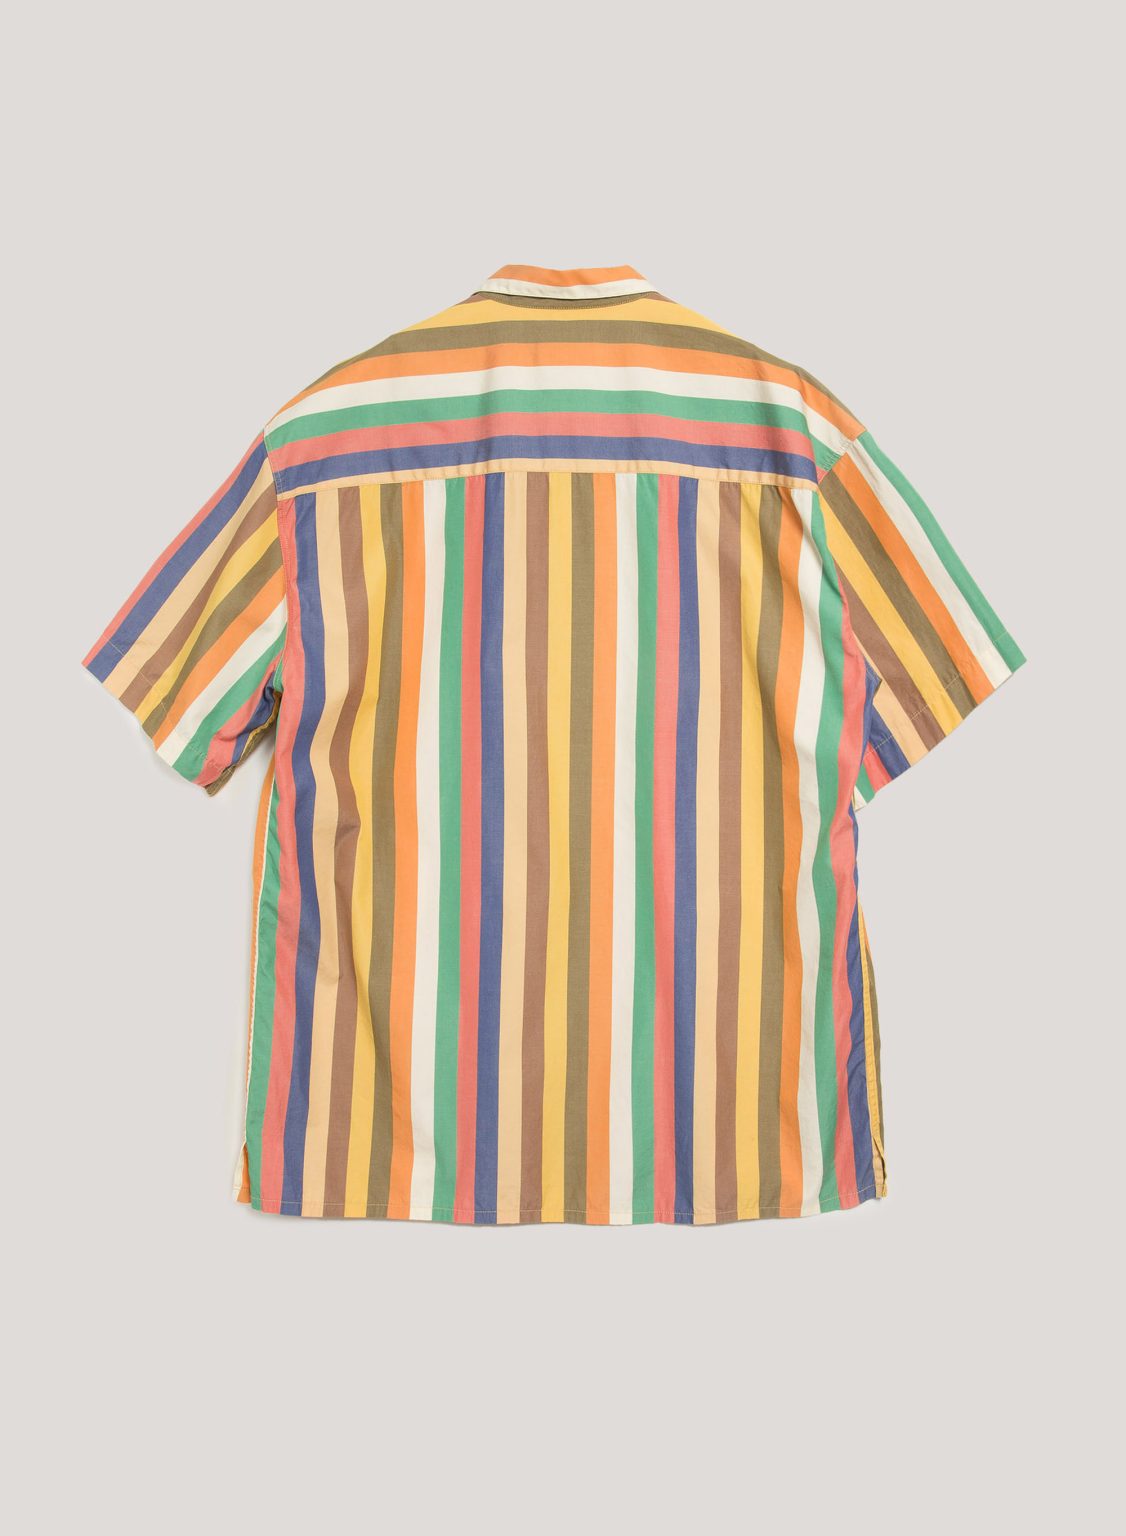 Mitchum Shirt - Stripe Multi